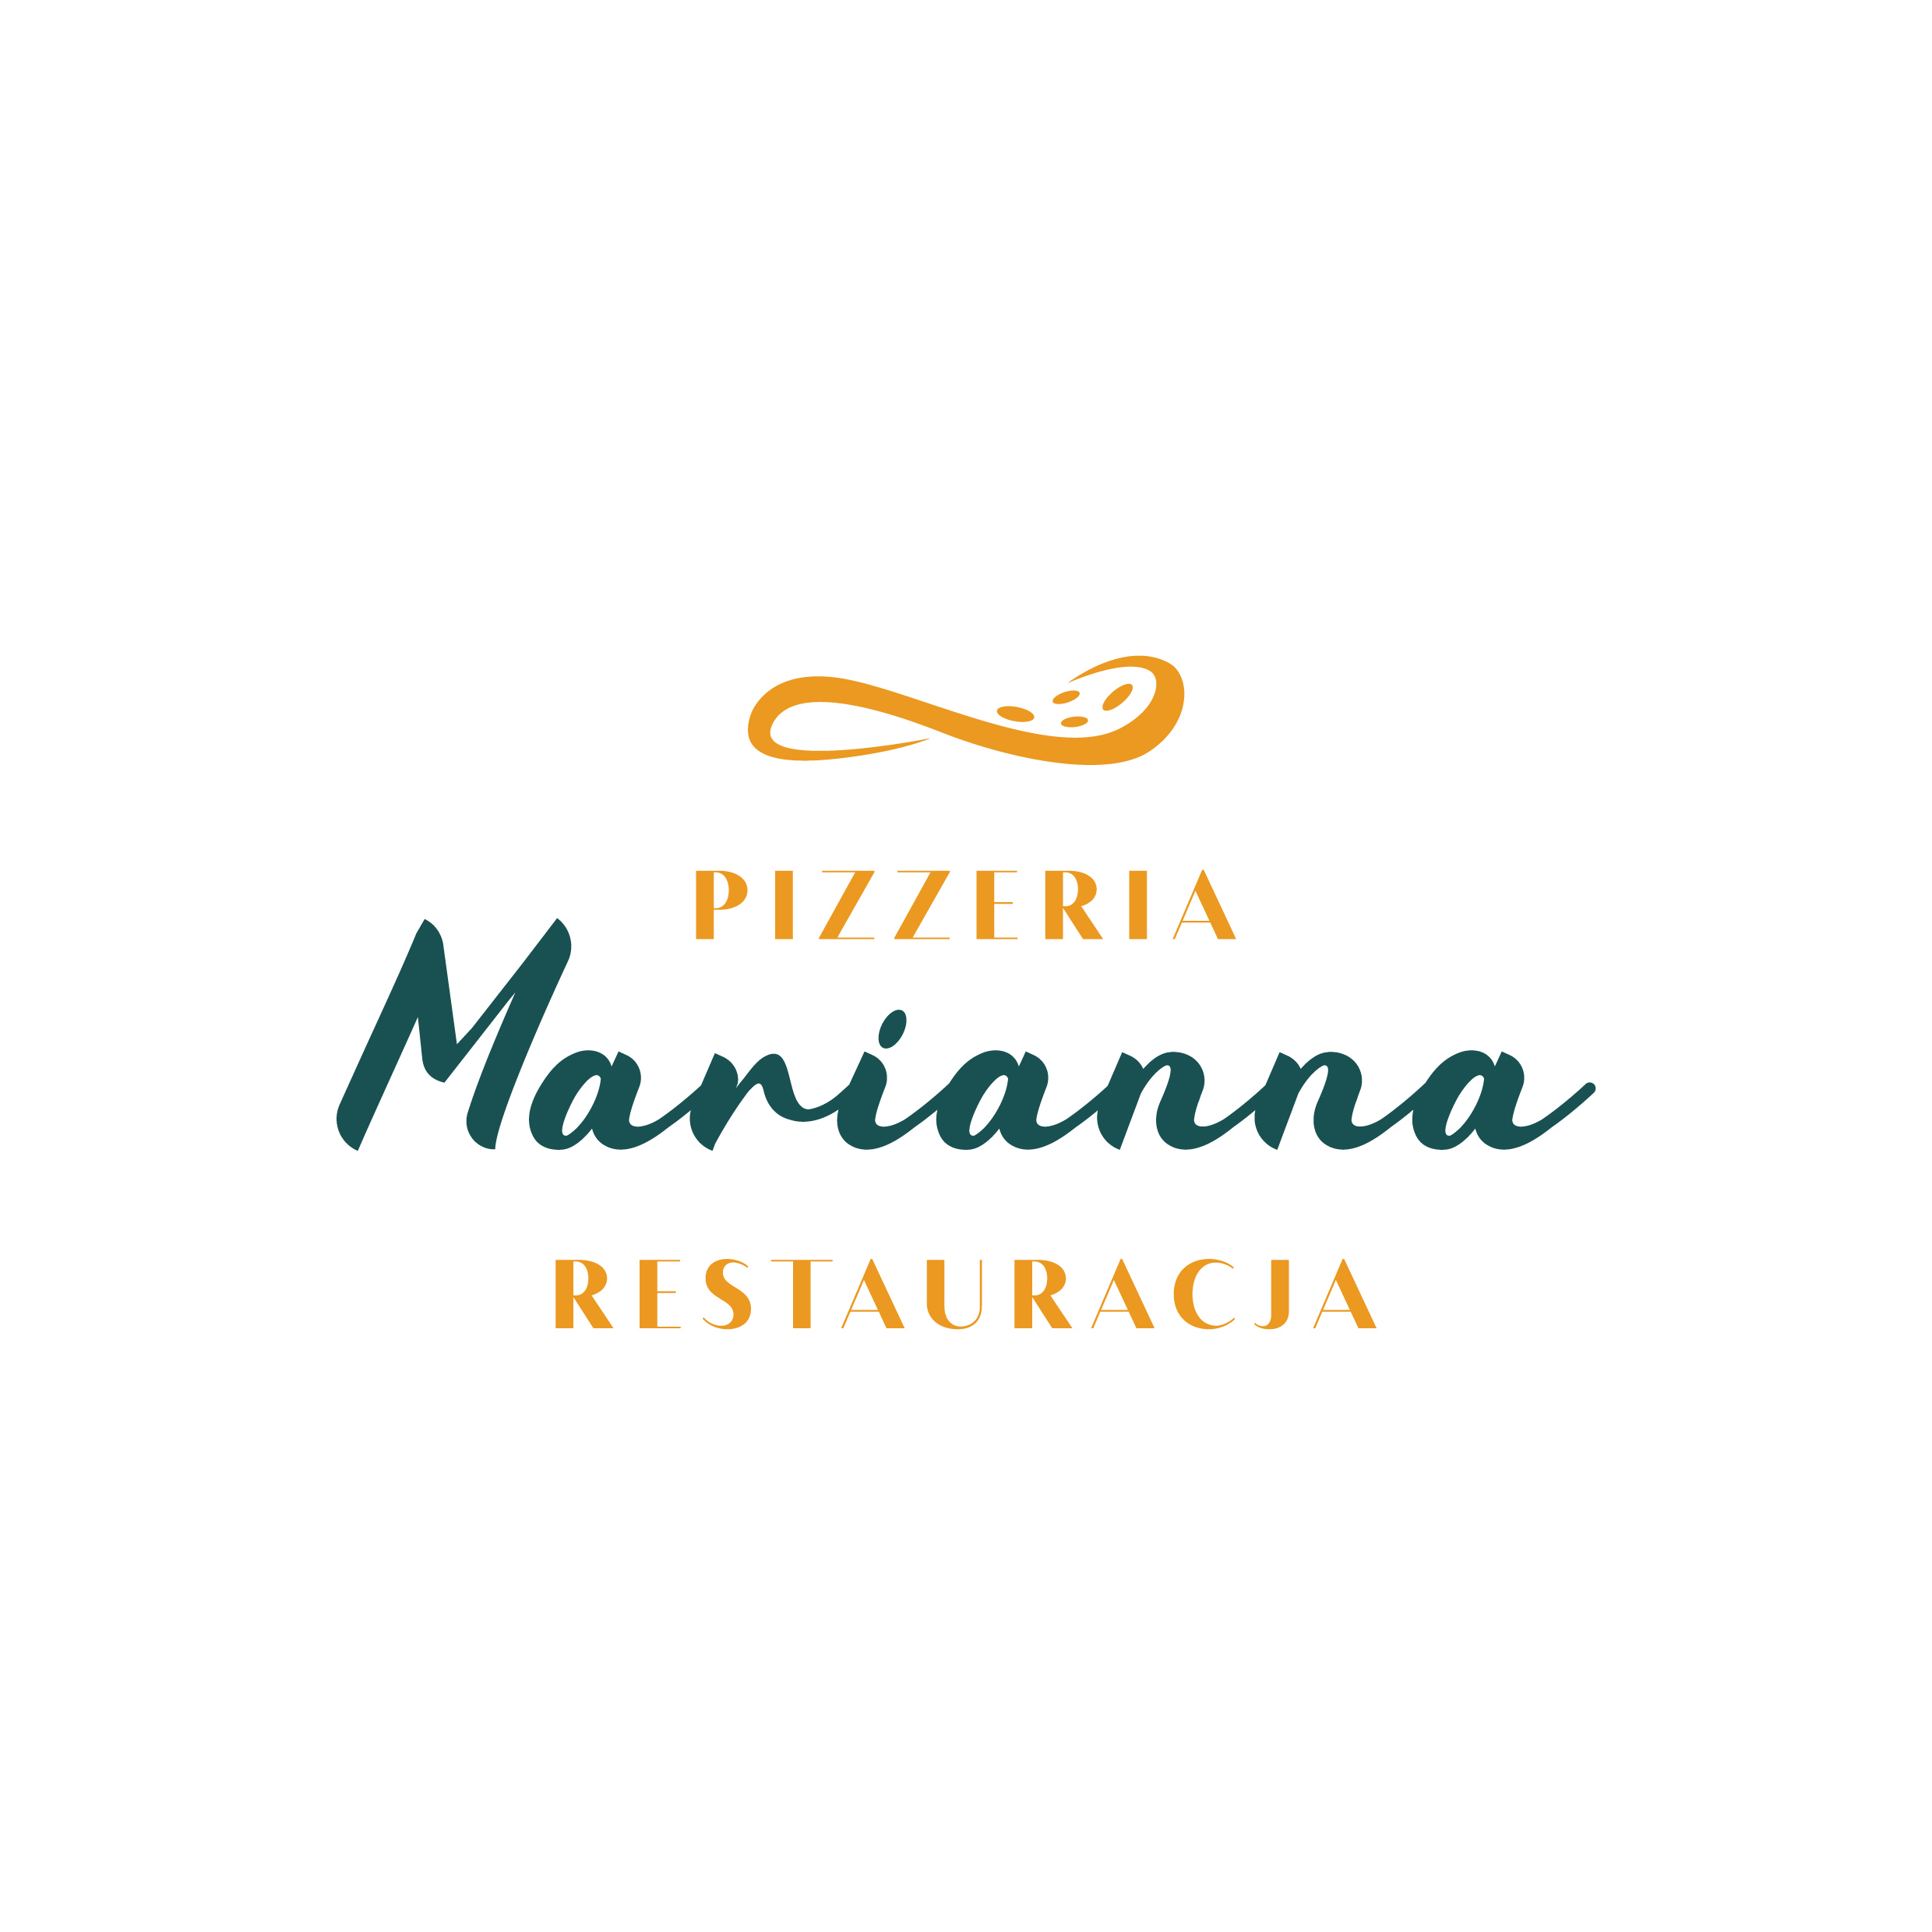 Pizzeria Marianna